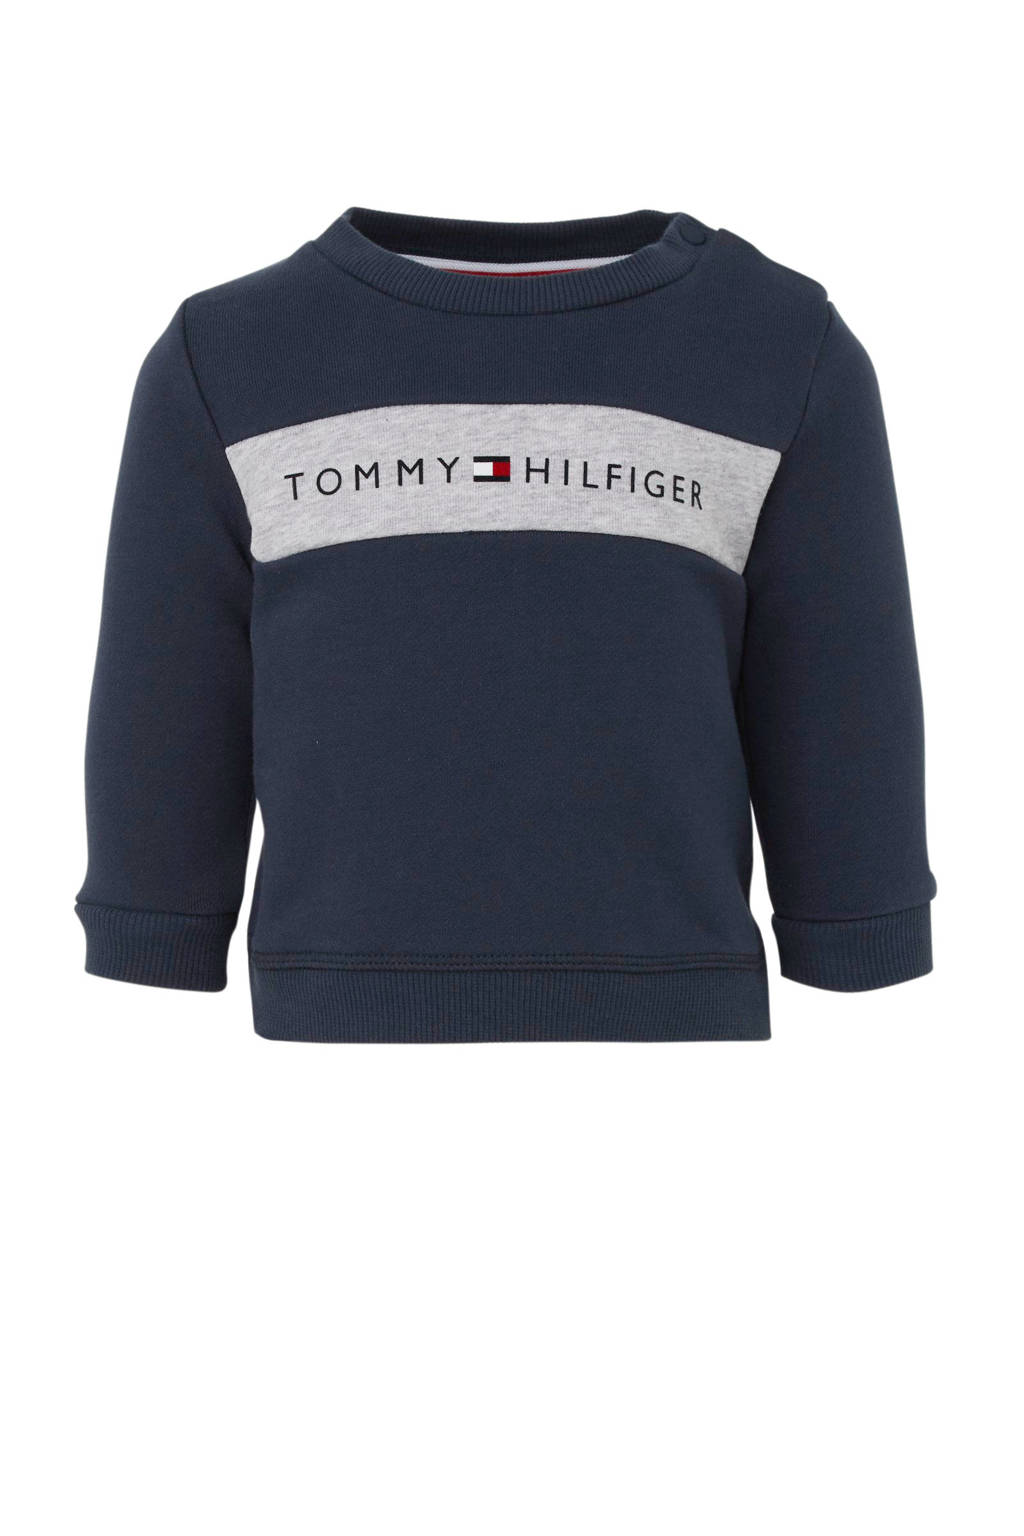 Vijftig slepen zaterdag Tommy Hilfiger baby sweater met logo donkerblauw | wehkamp